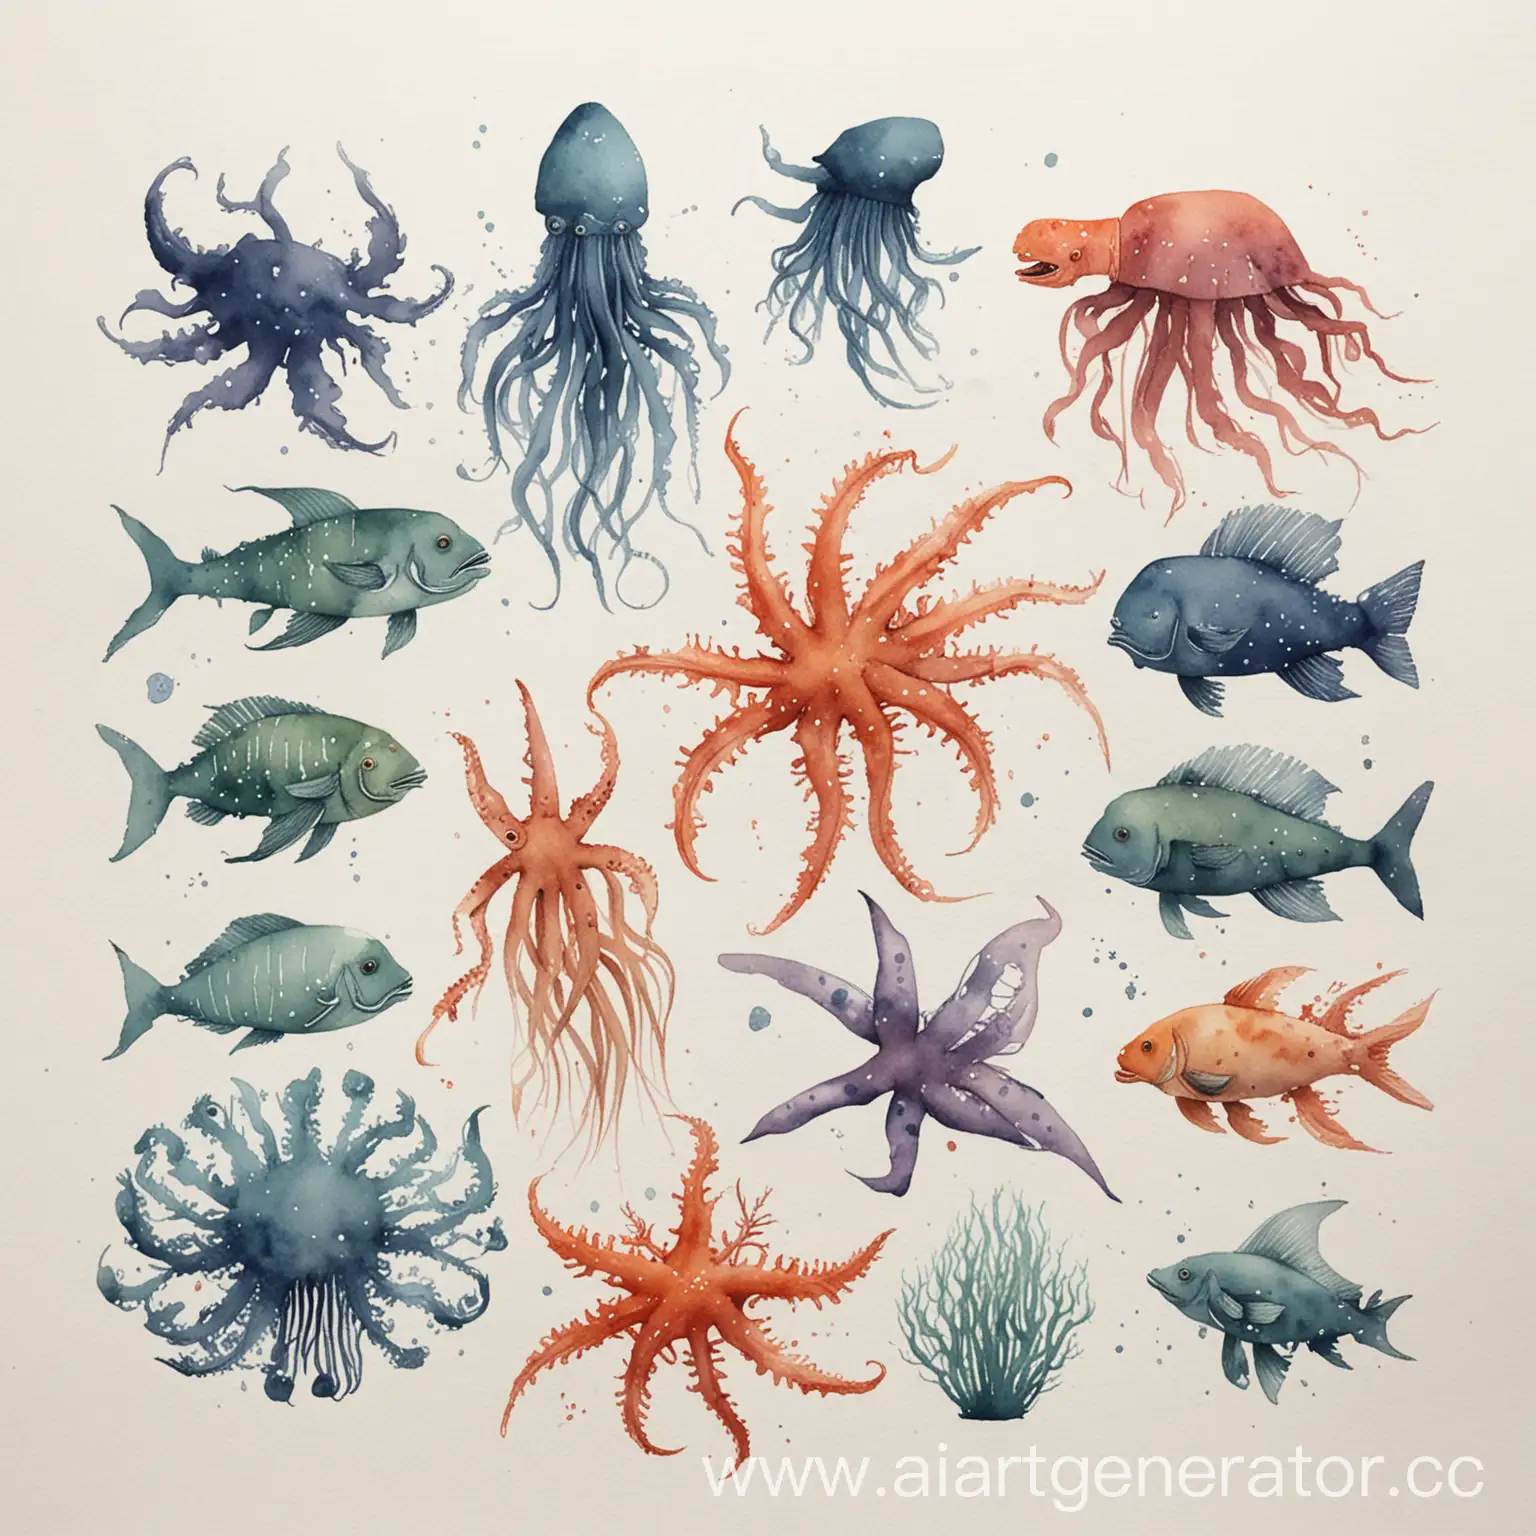 Minimalist-Watercolor-Drawings-of-Various-Marine-Creatures